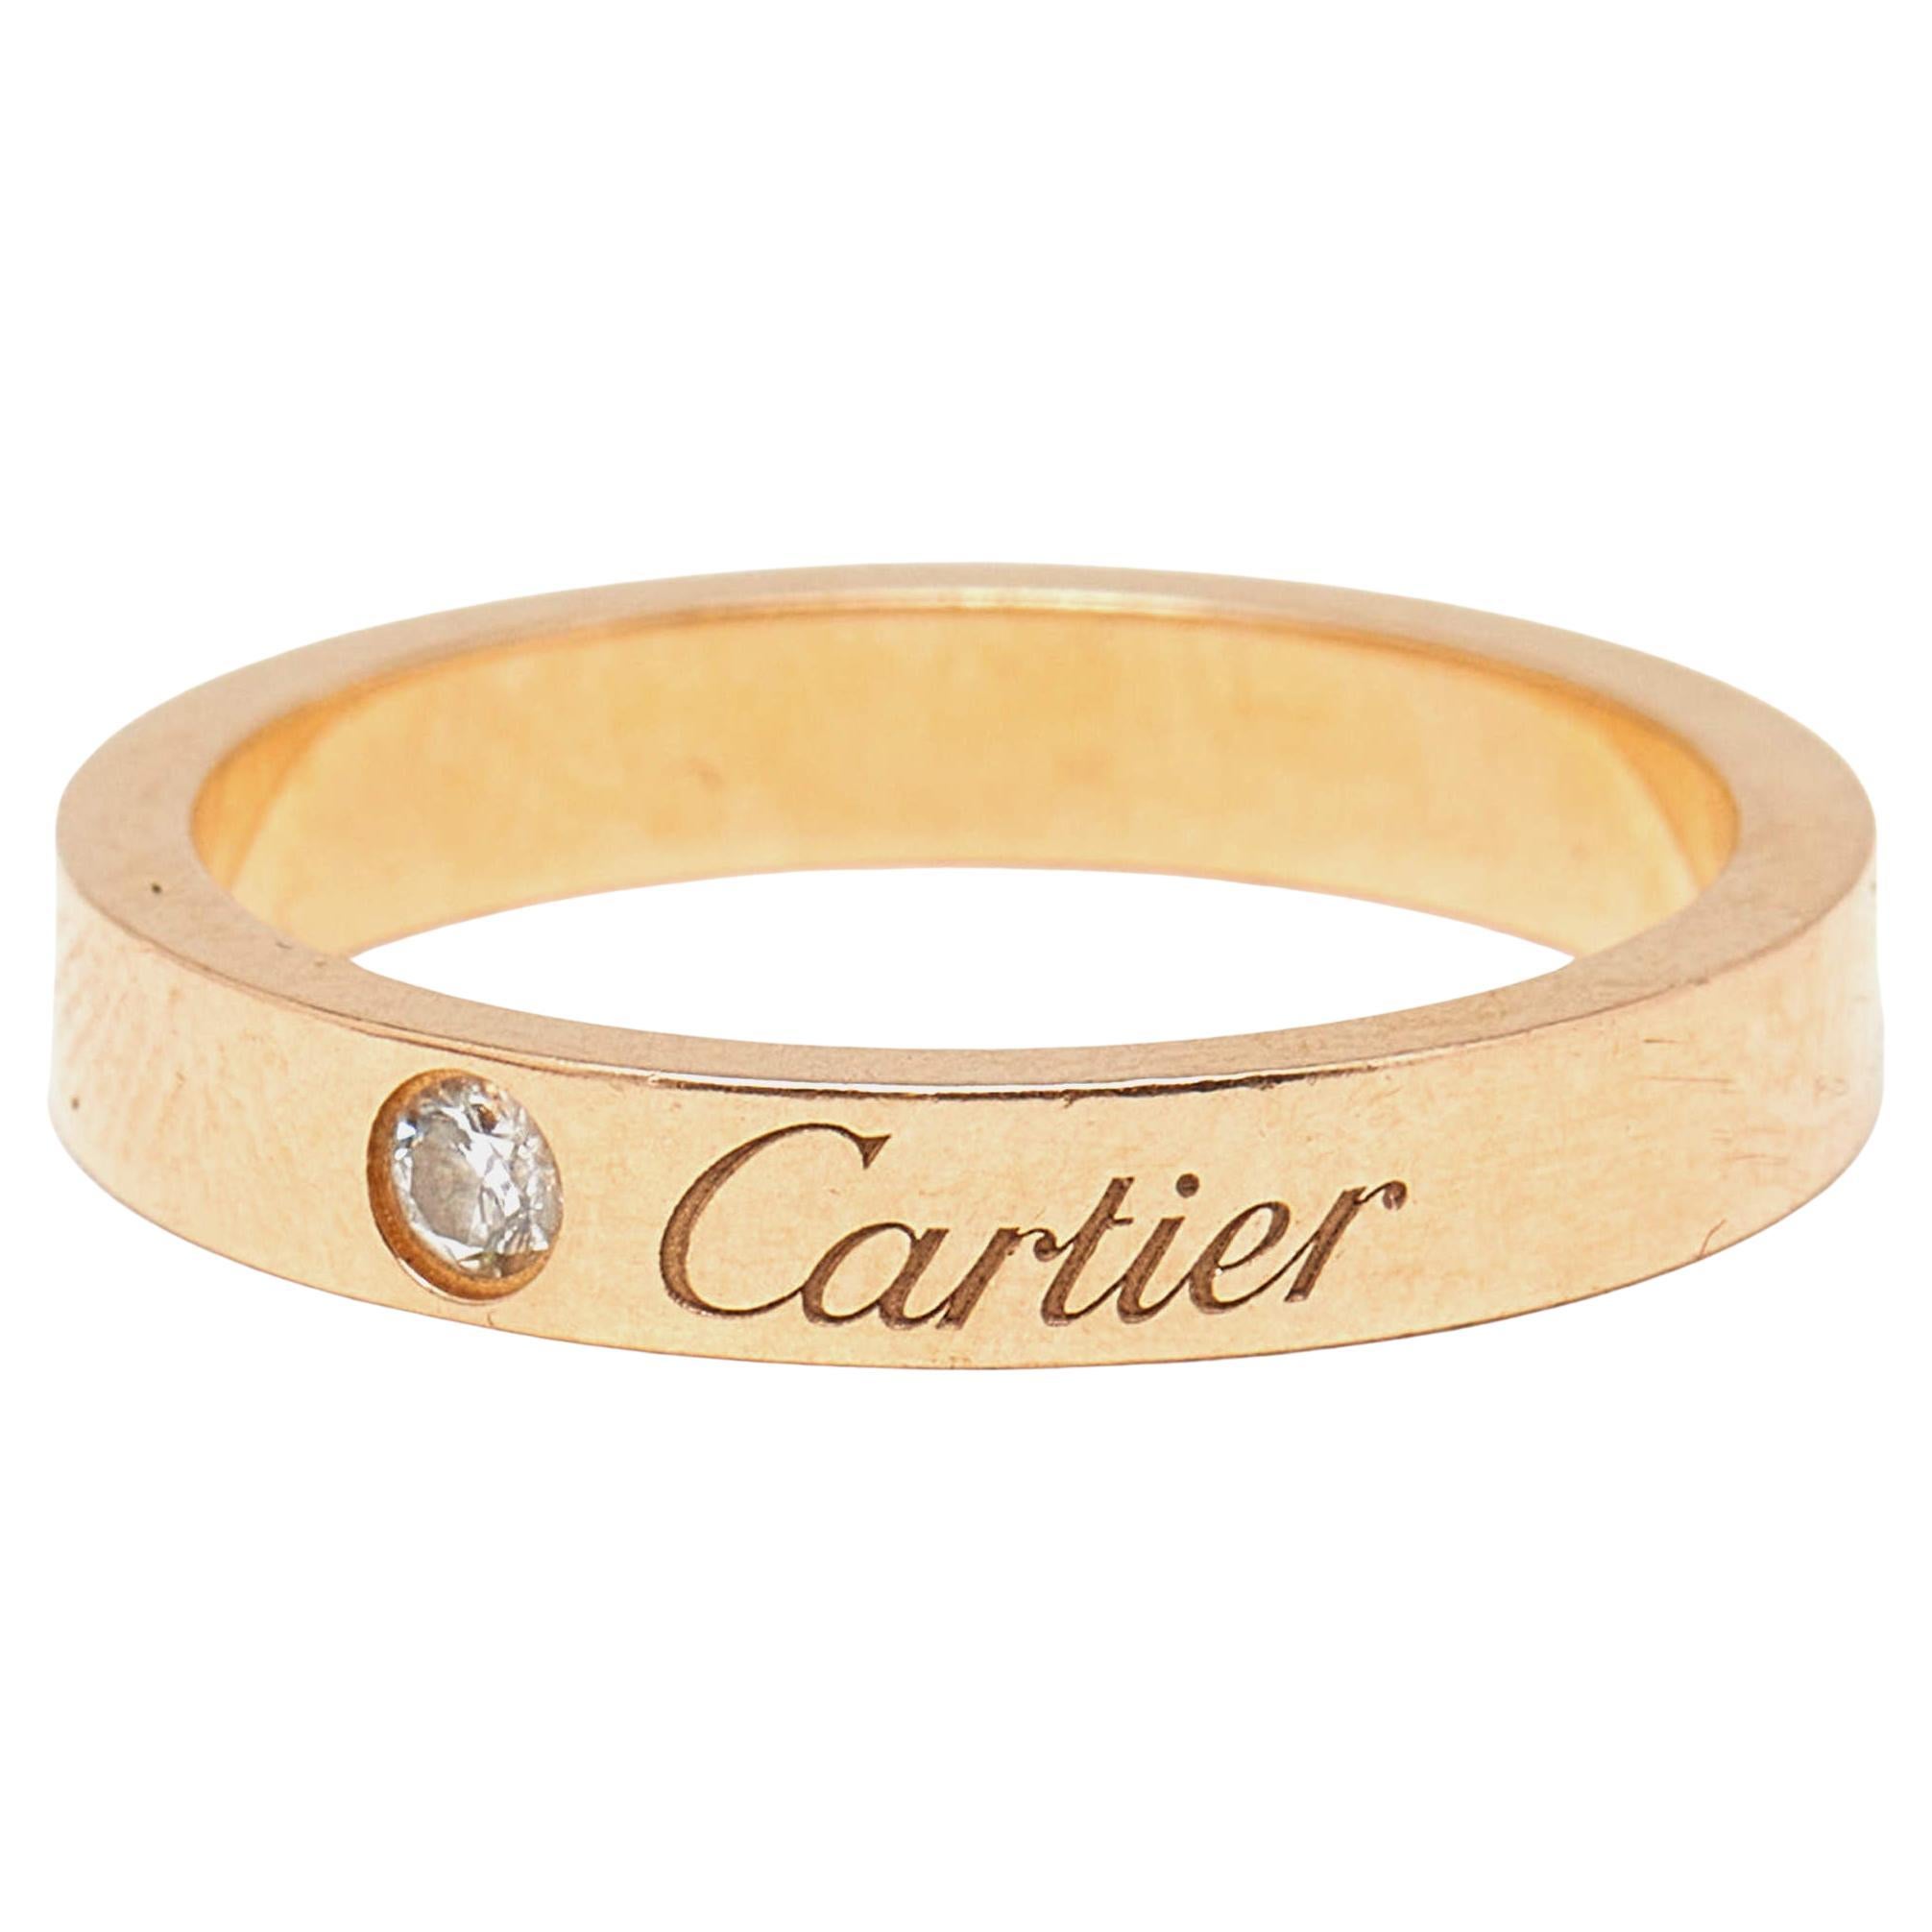 Cartier C De Cartier Diamond 18k Rose Gold Ring Size 50